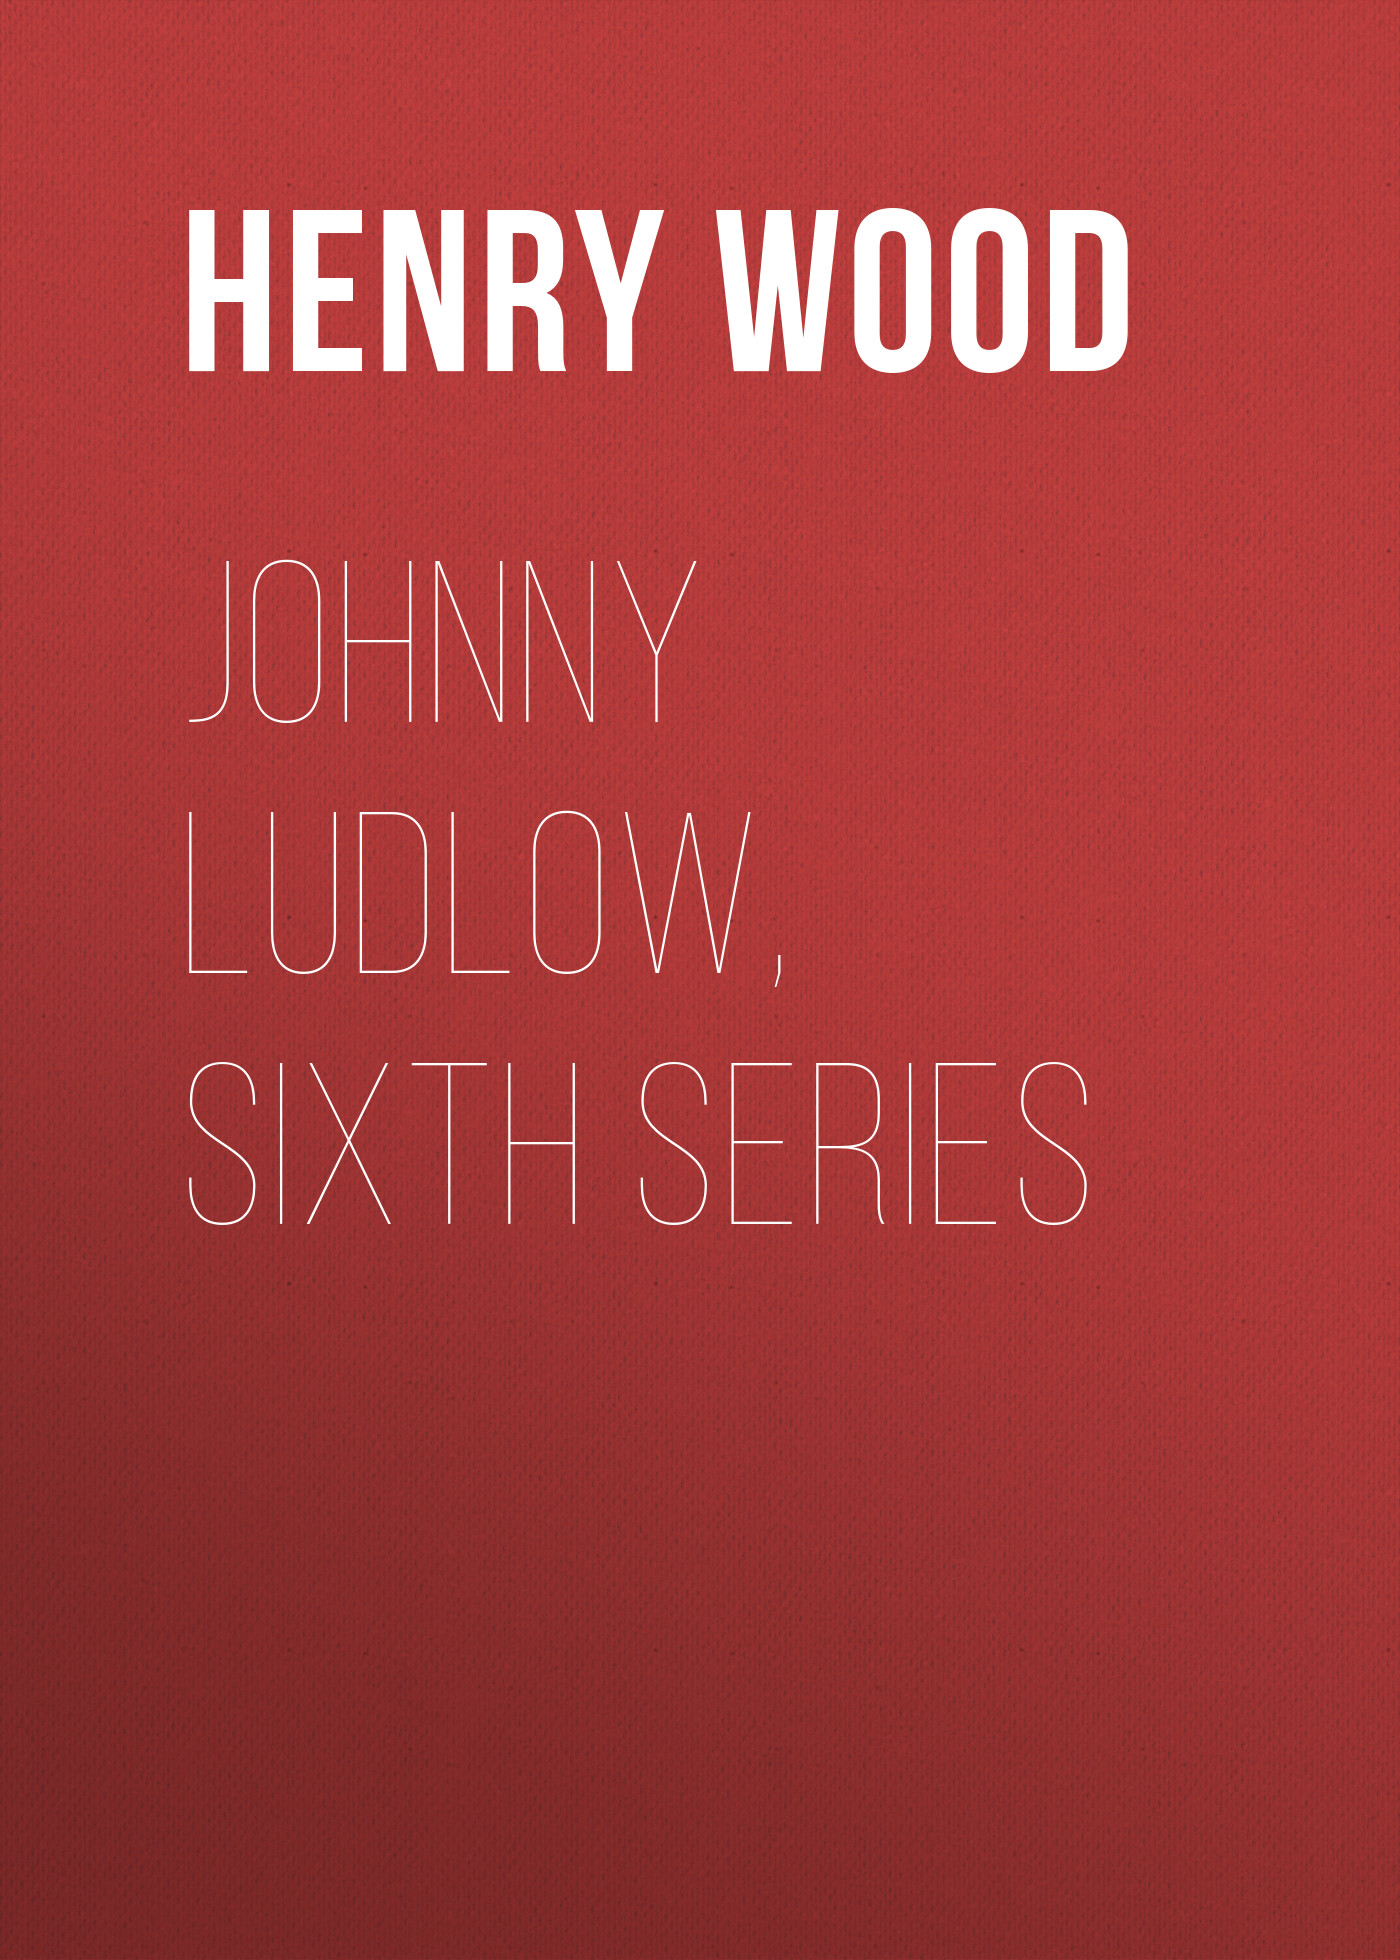 Henry Wood Johnny Ludlow, Sixth Series